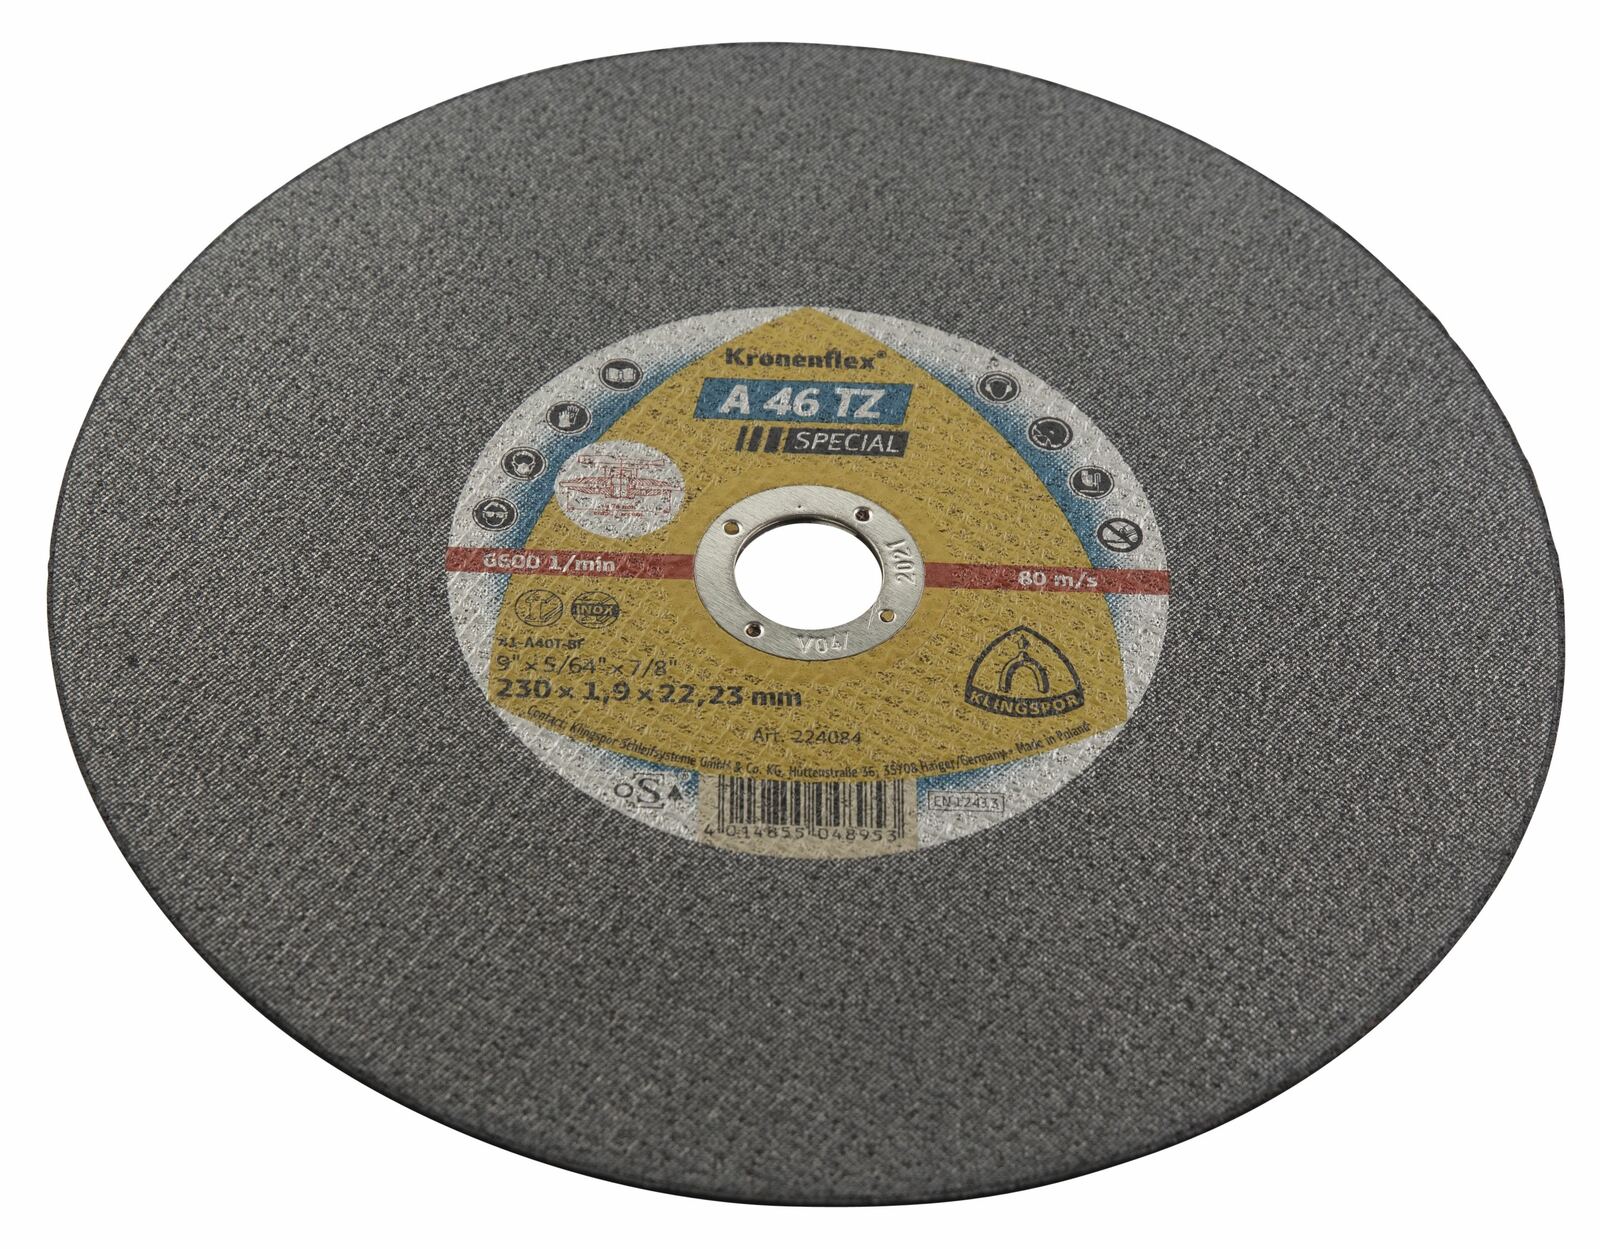 Cutting Disc 9 Inch Steel Inox